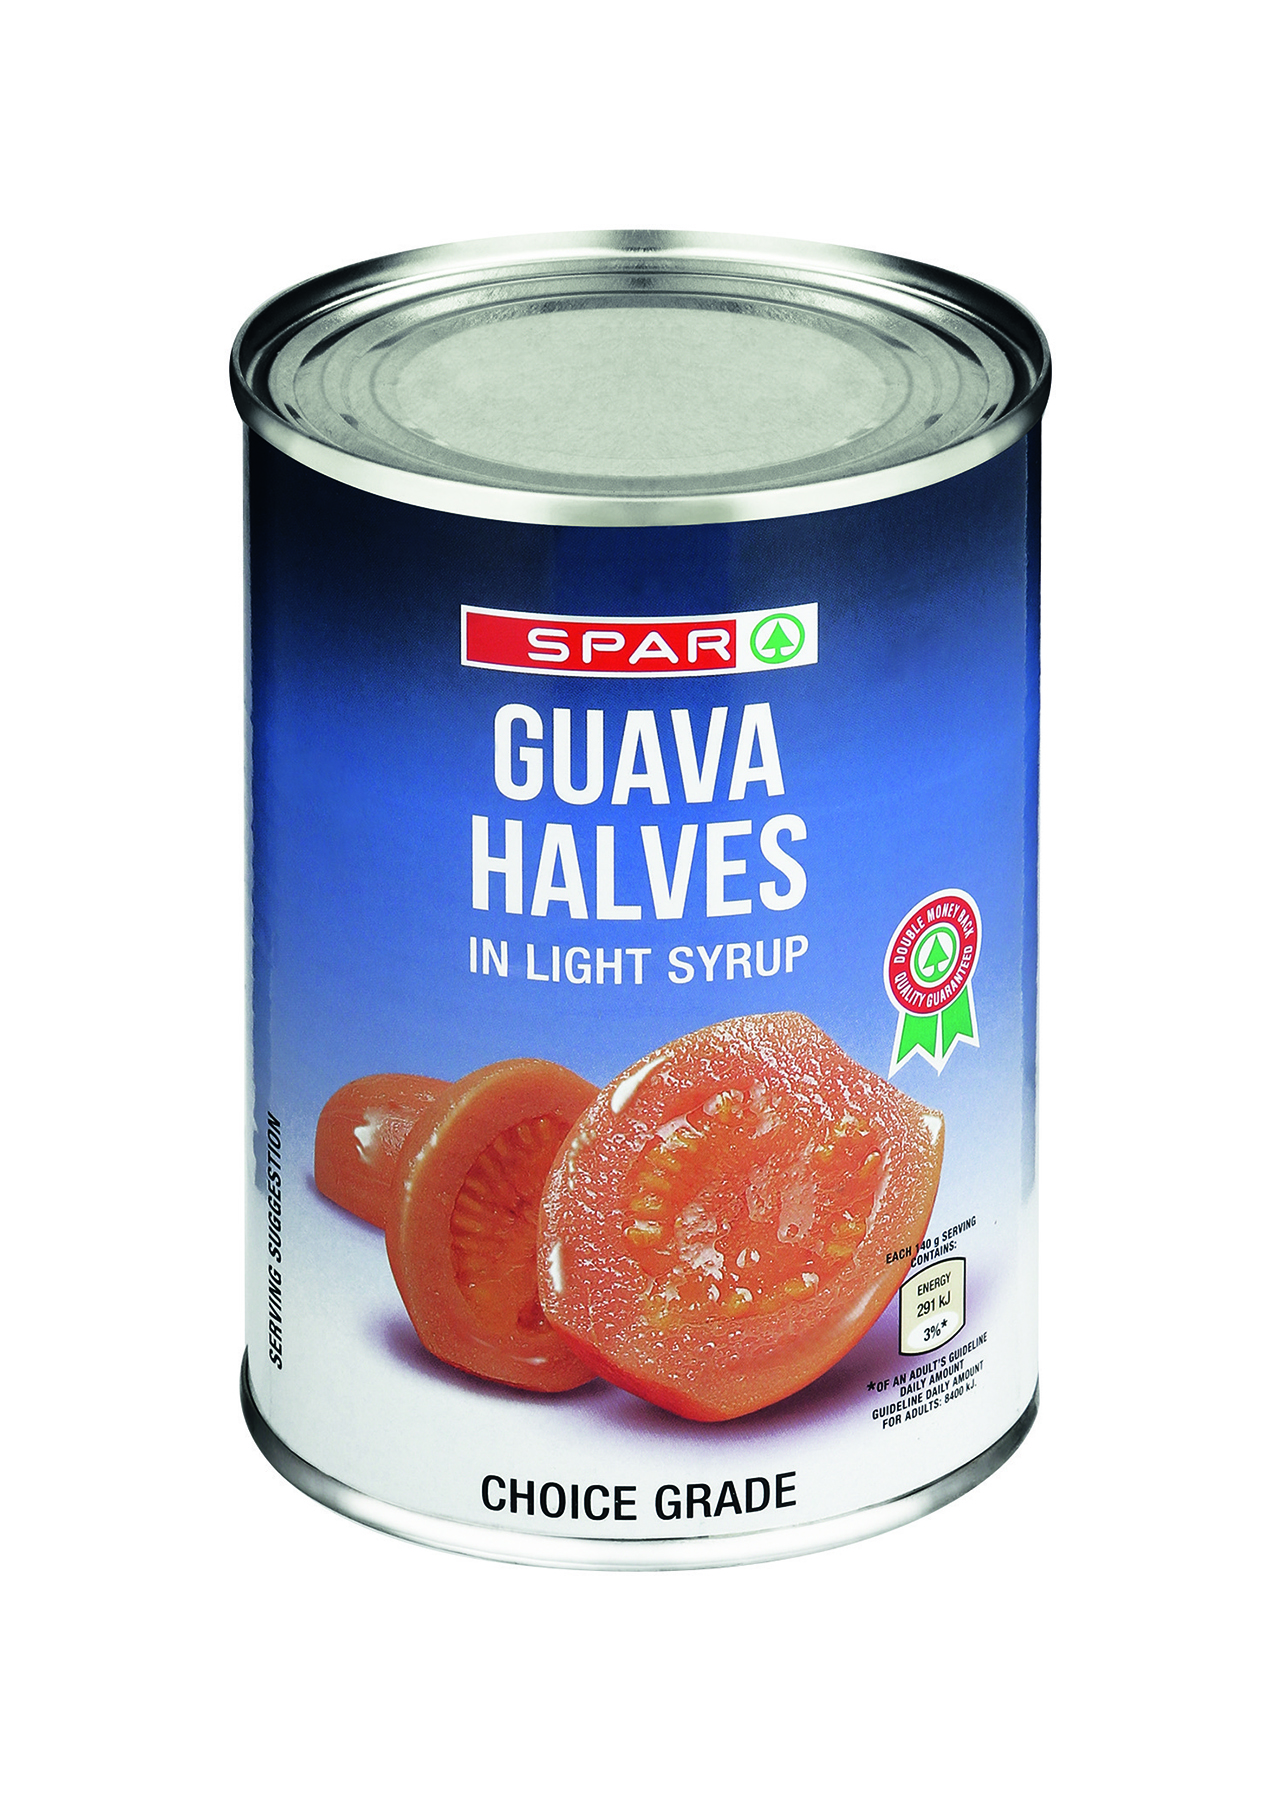 guava halves